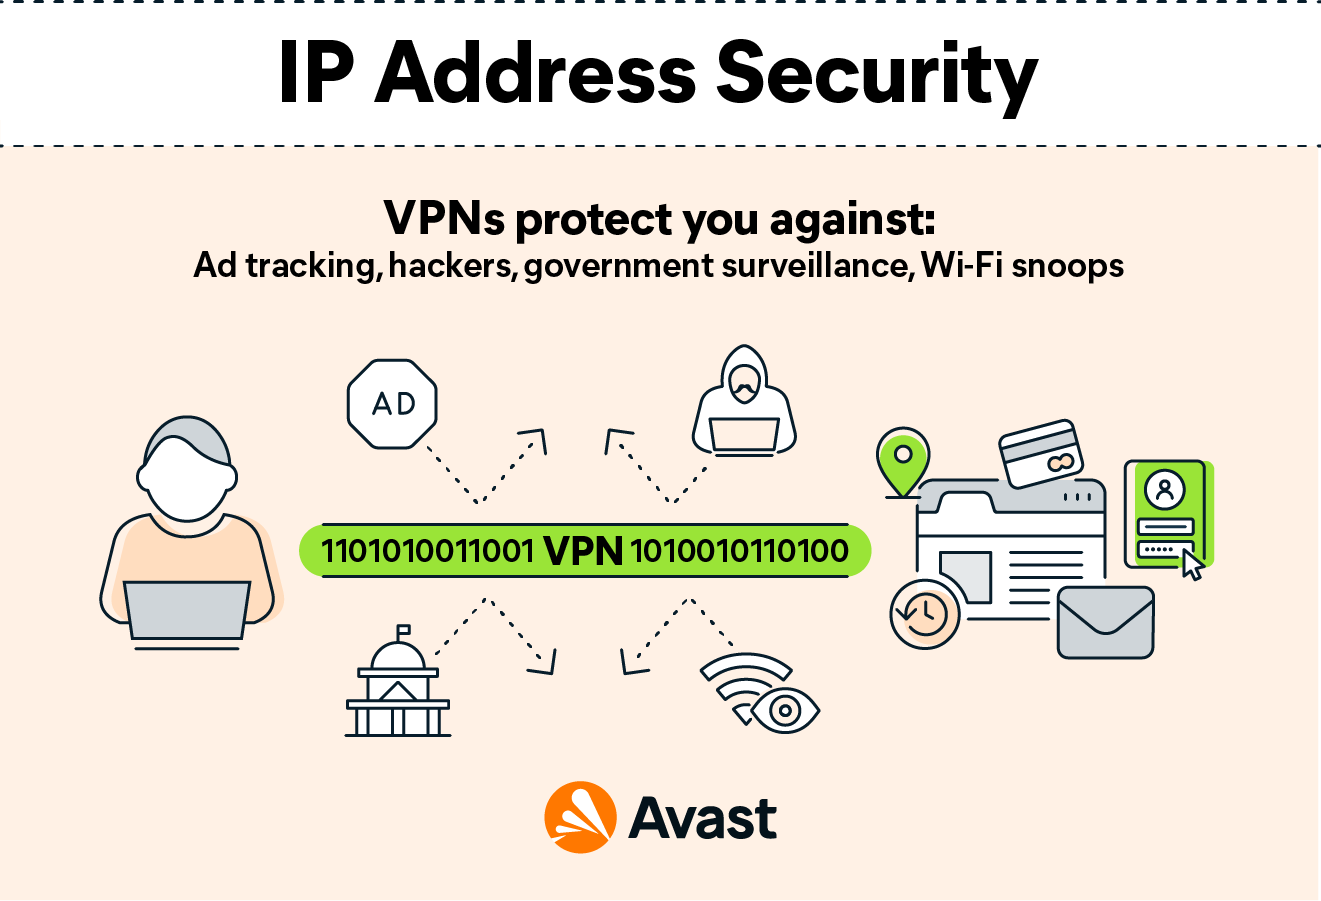 Does a VPN have a public IP address?